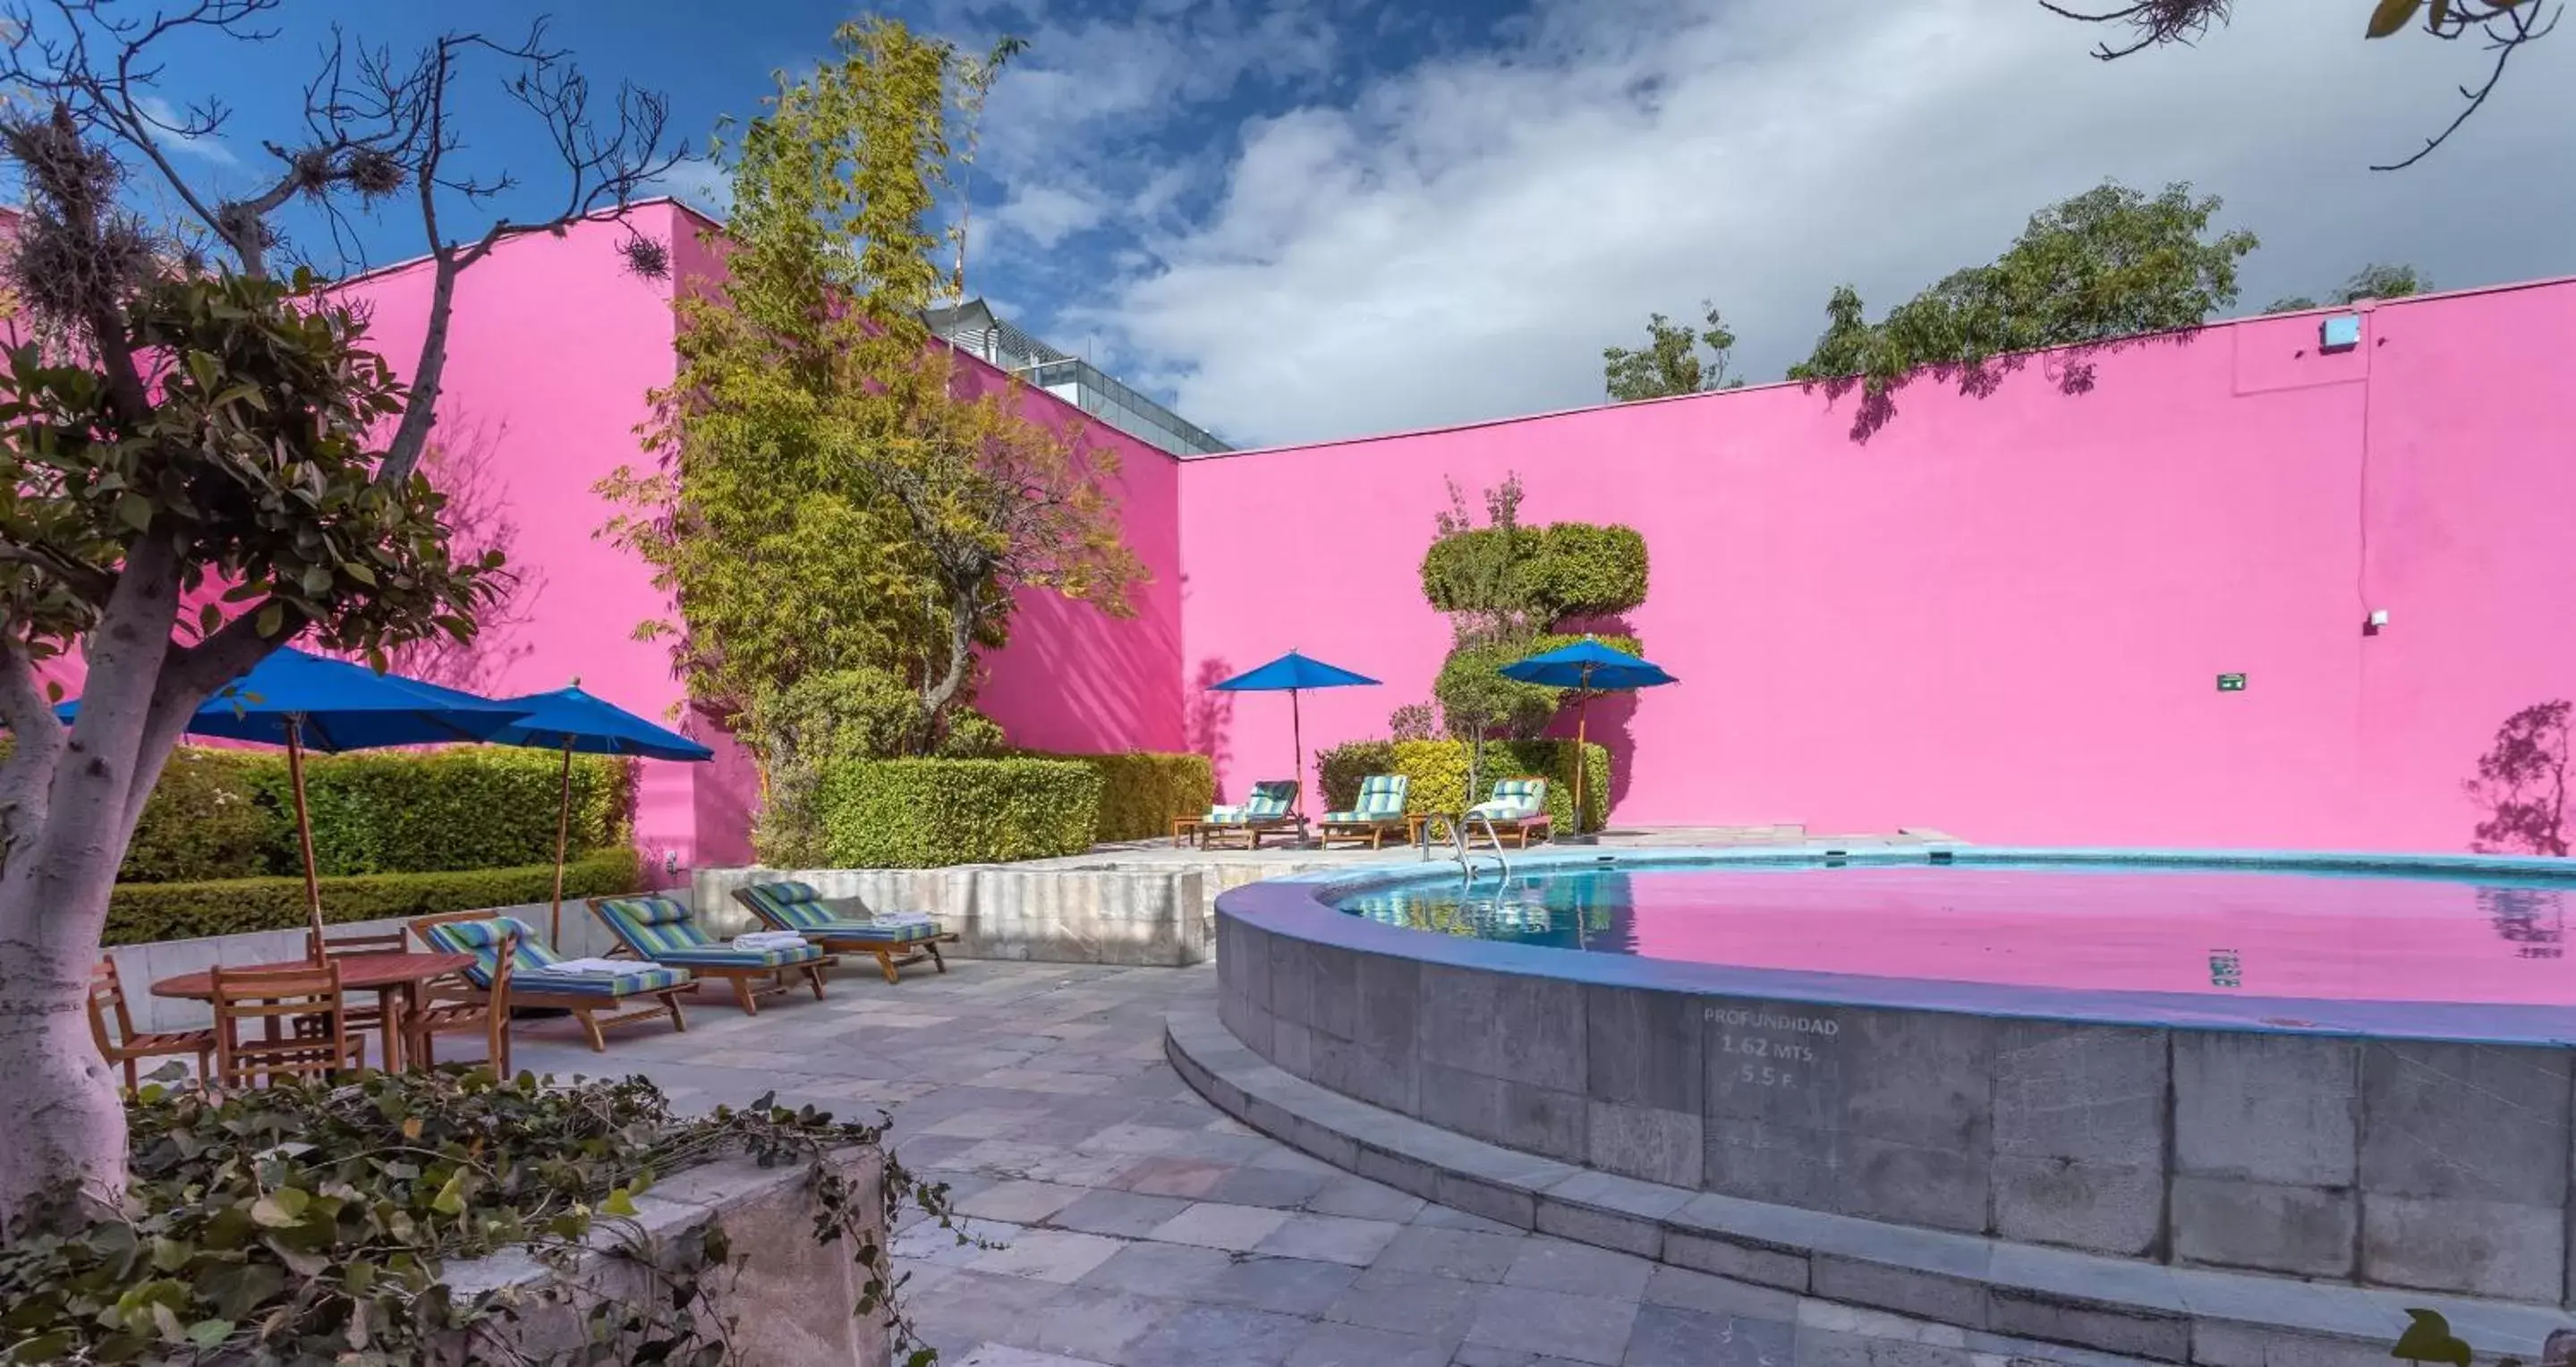 Swimming Pool in Camino Real Polanco Mexico